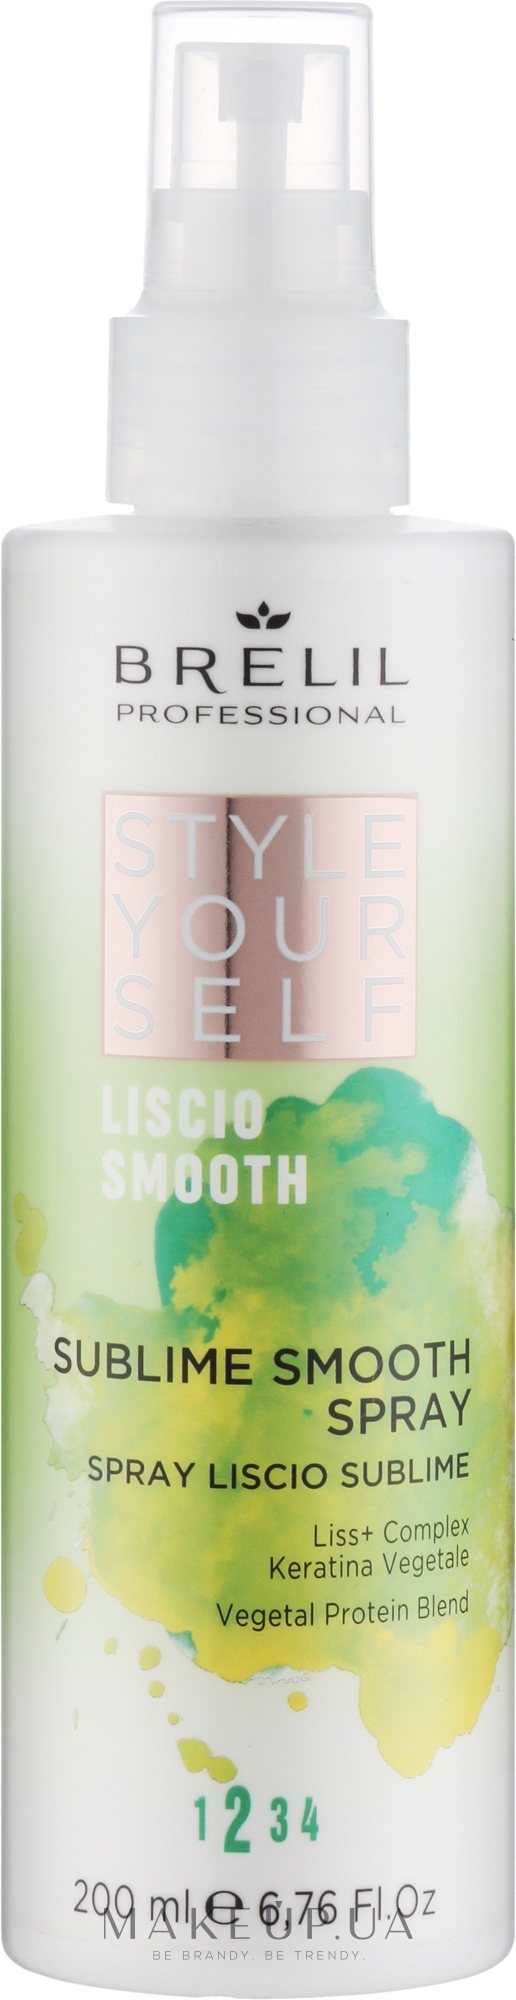 Разглаживающий спрей для волос - Brelil Style Yourself Smooth Sublime Smooth Spray — фото 200ml